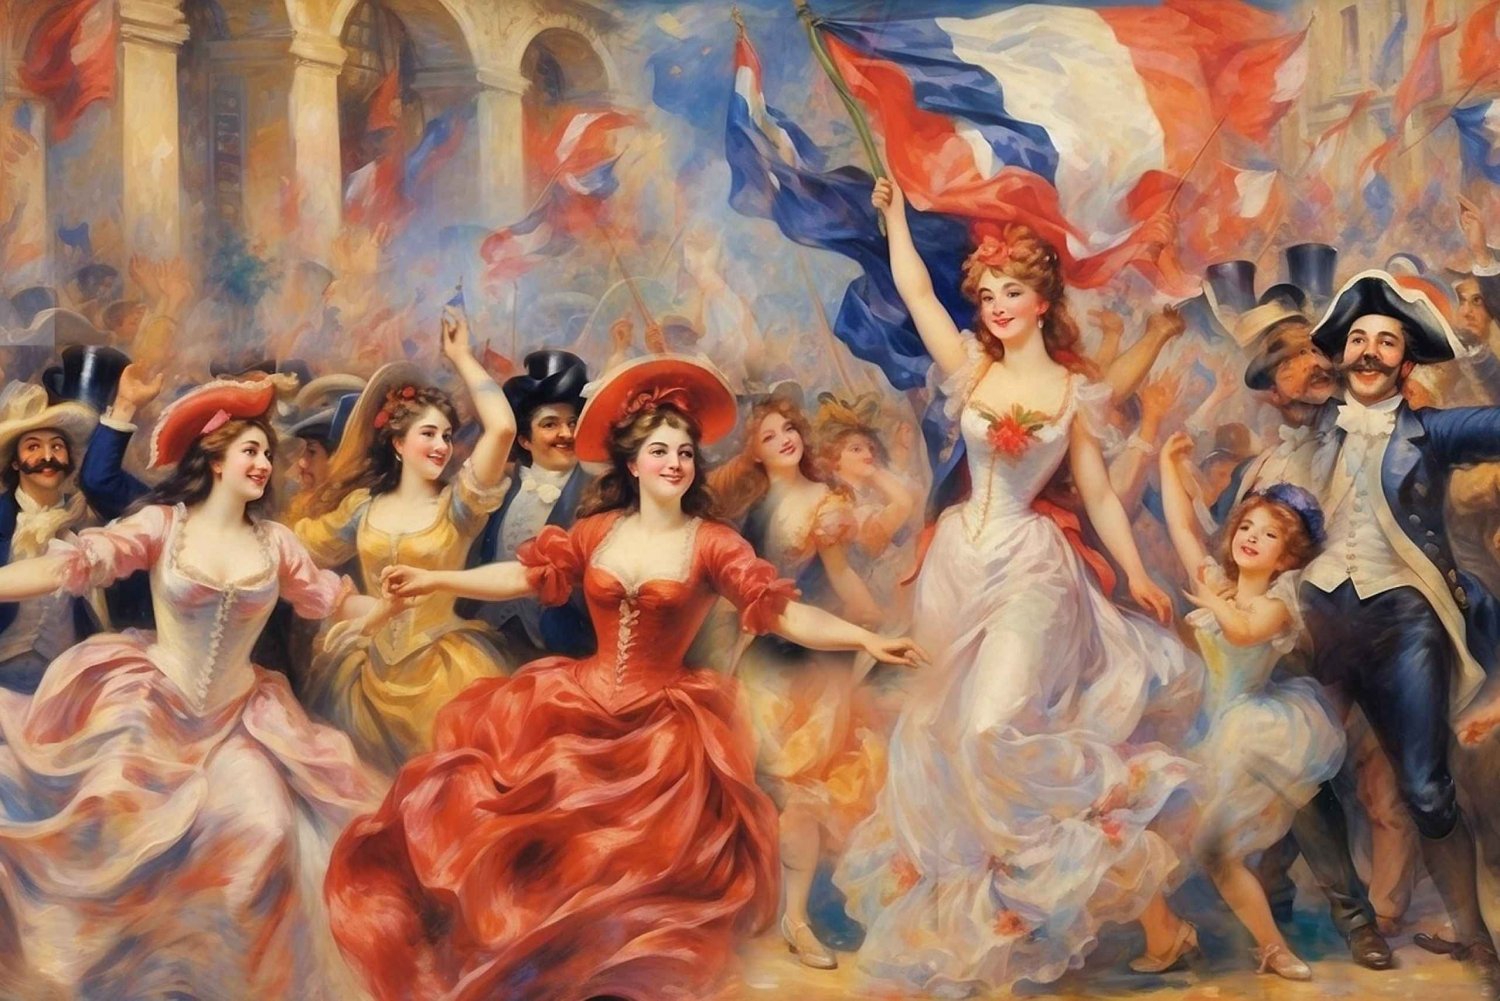 Paris Fransk revolusjon Marie Antoinette Les Misérables Tour